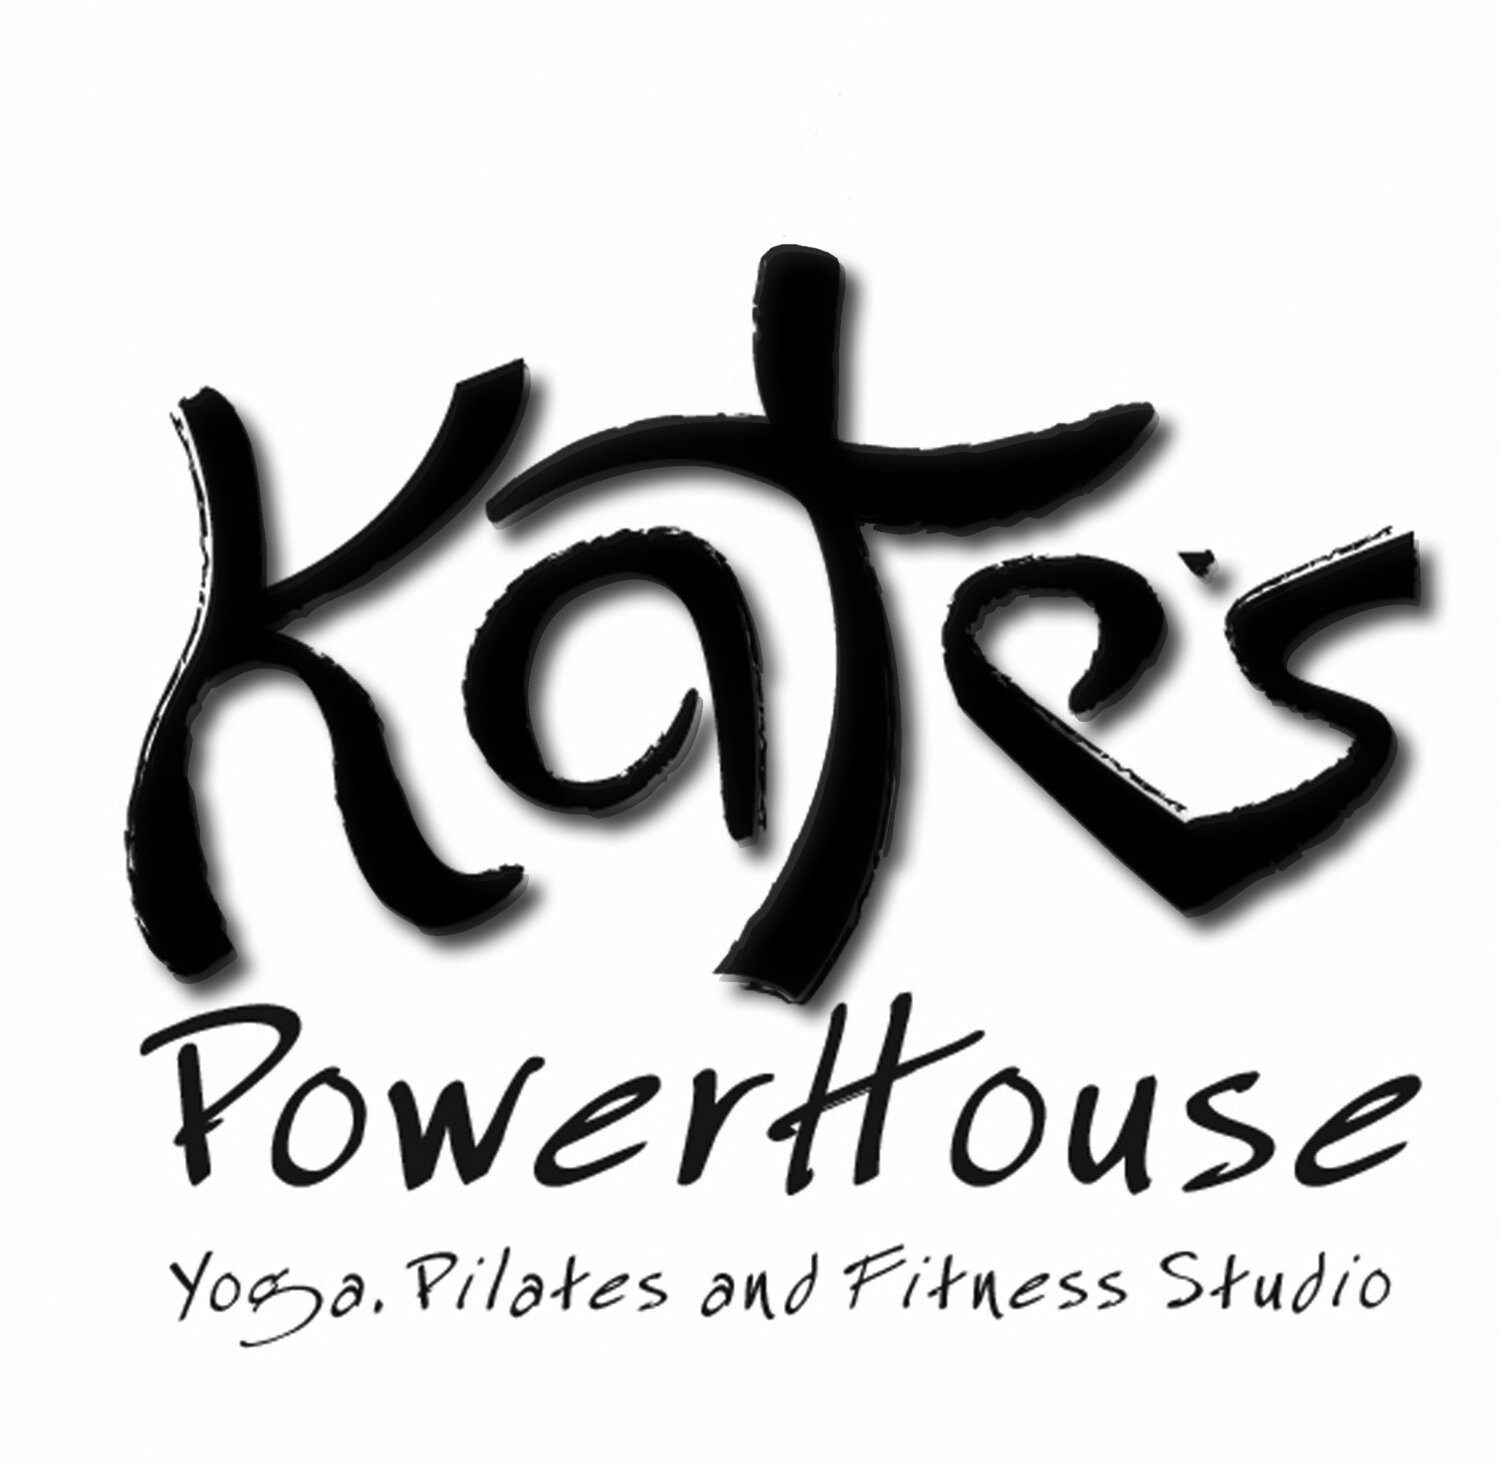 Kate's PowerHouse